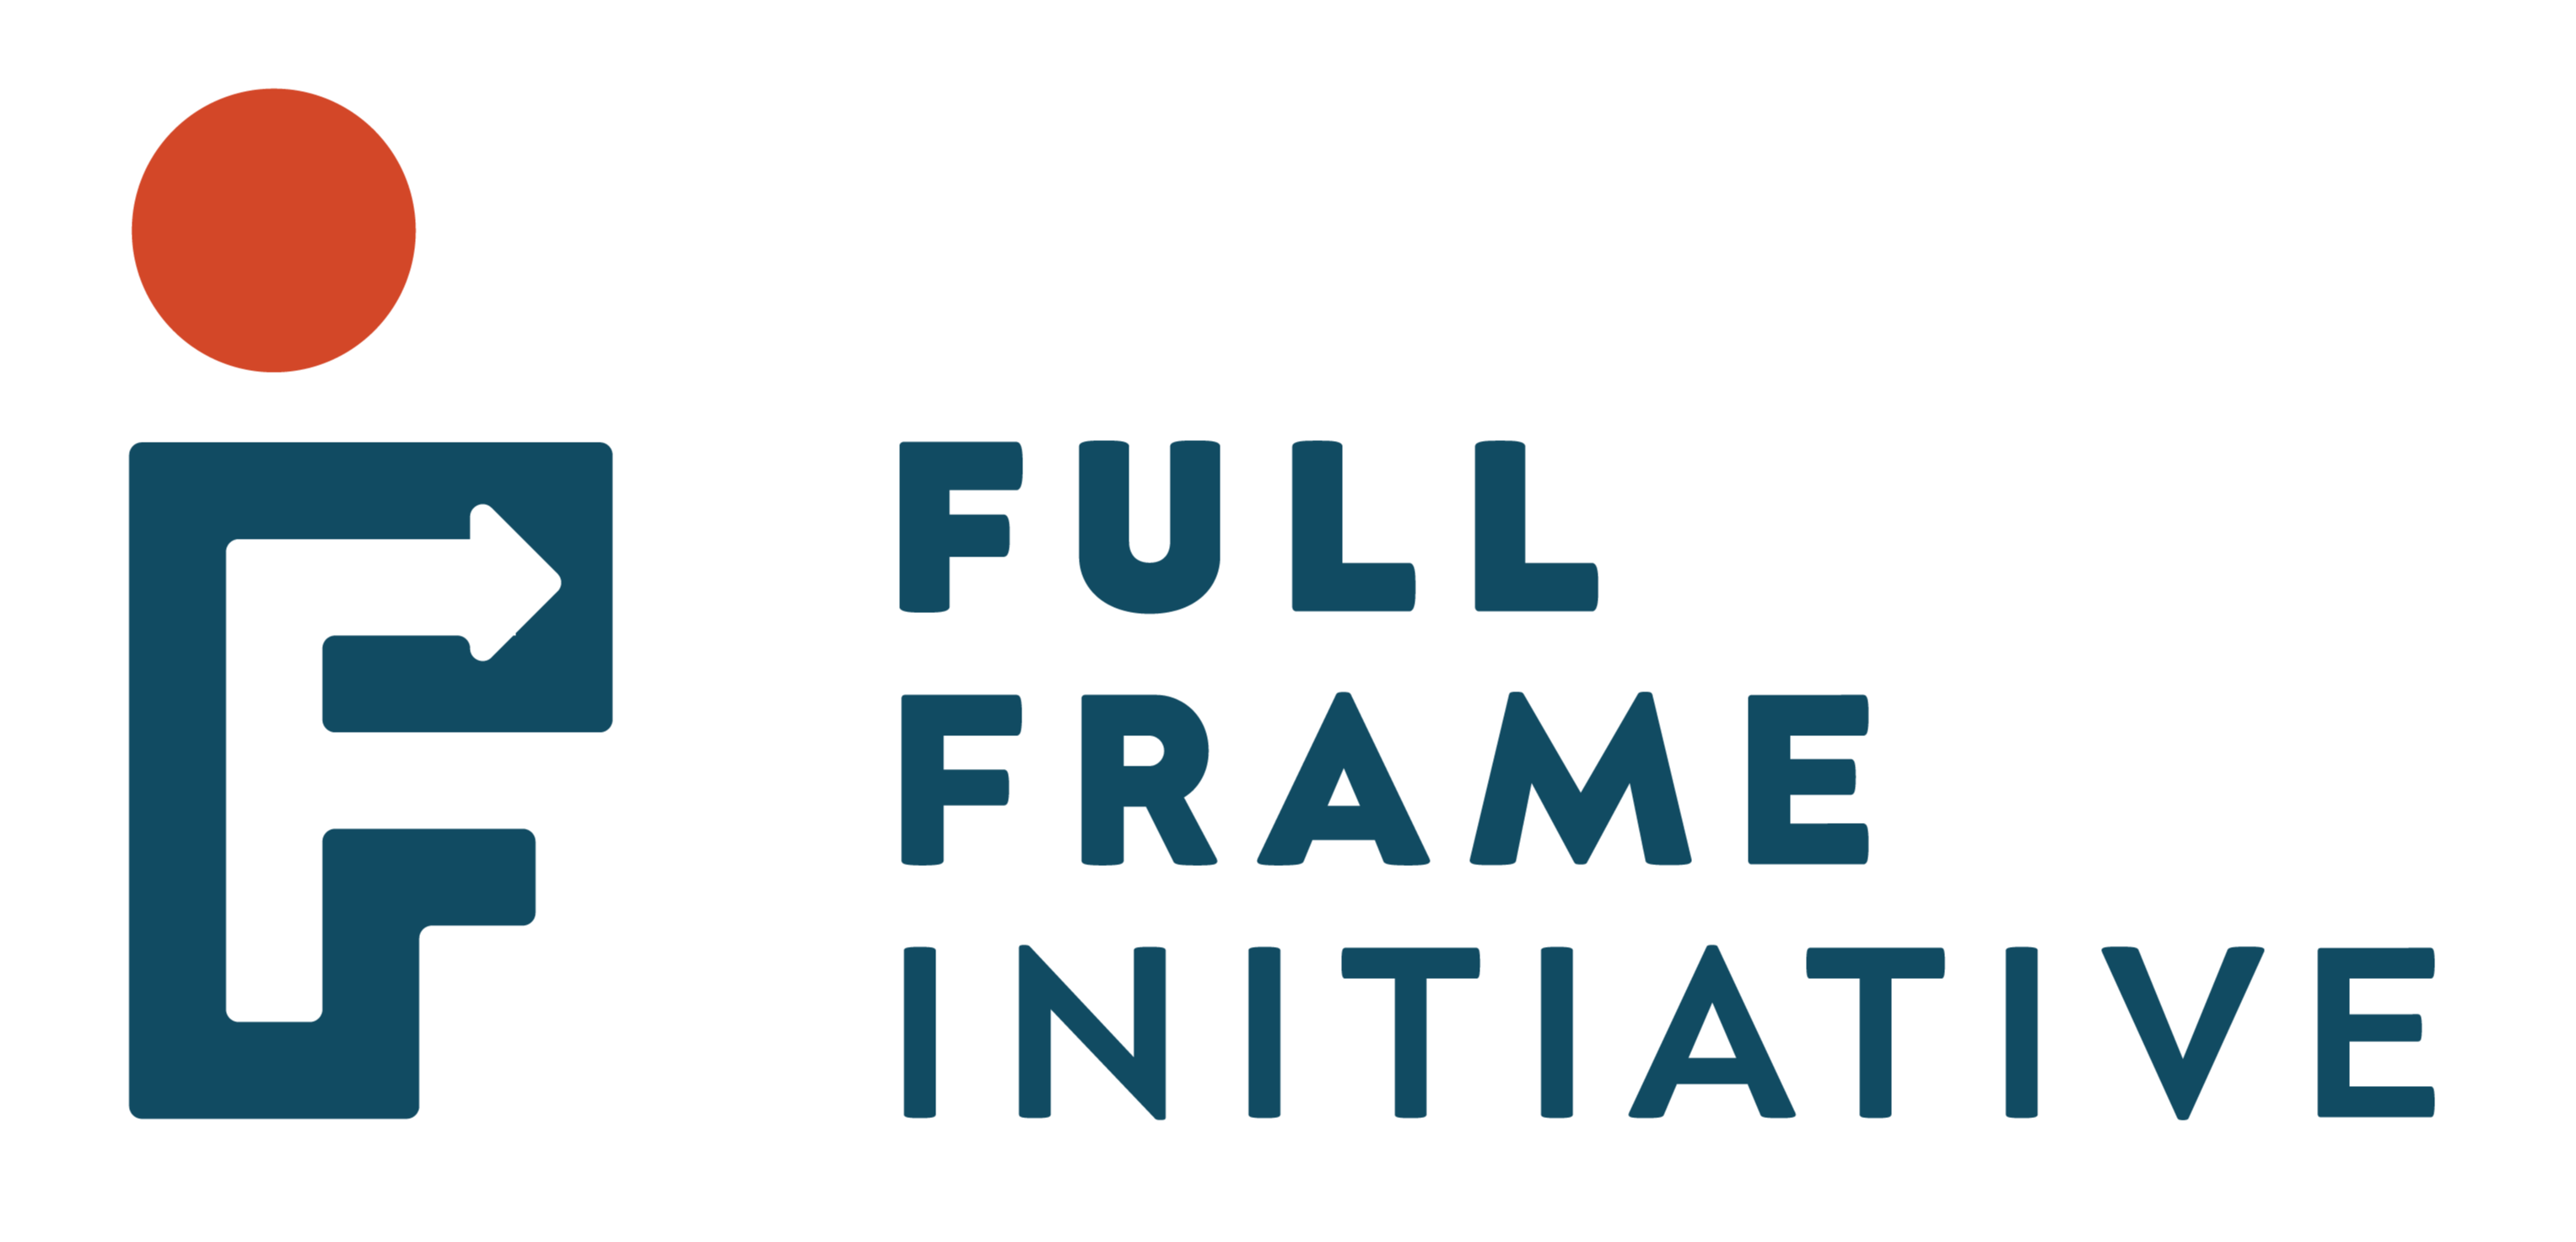 Full Frame Initiative logo